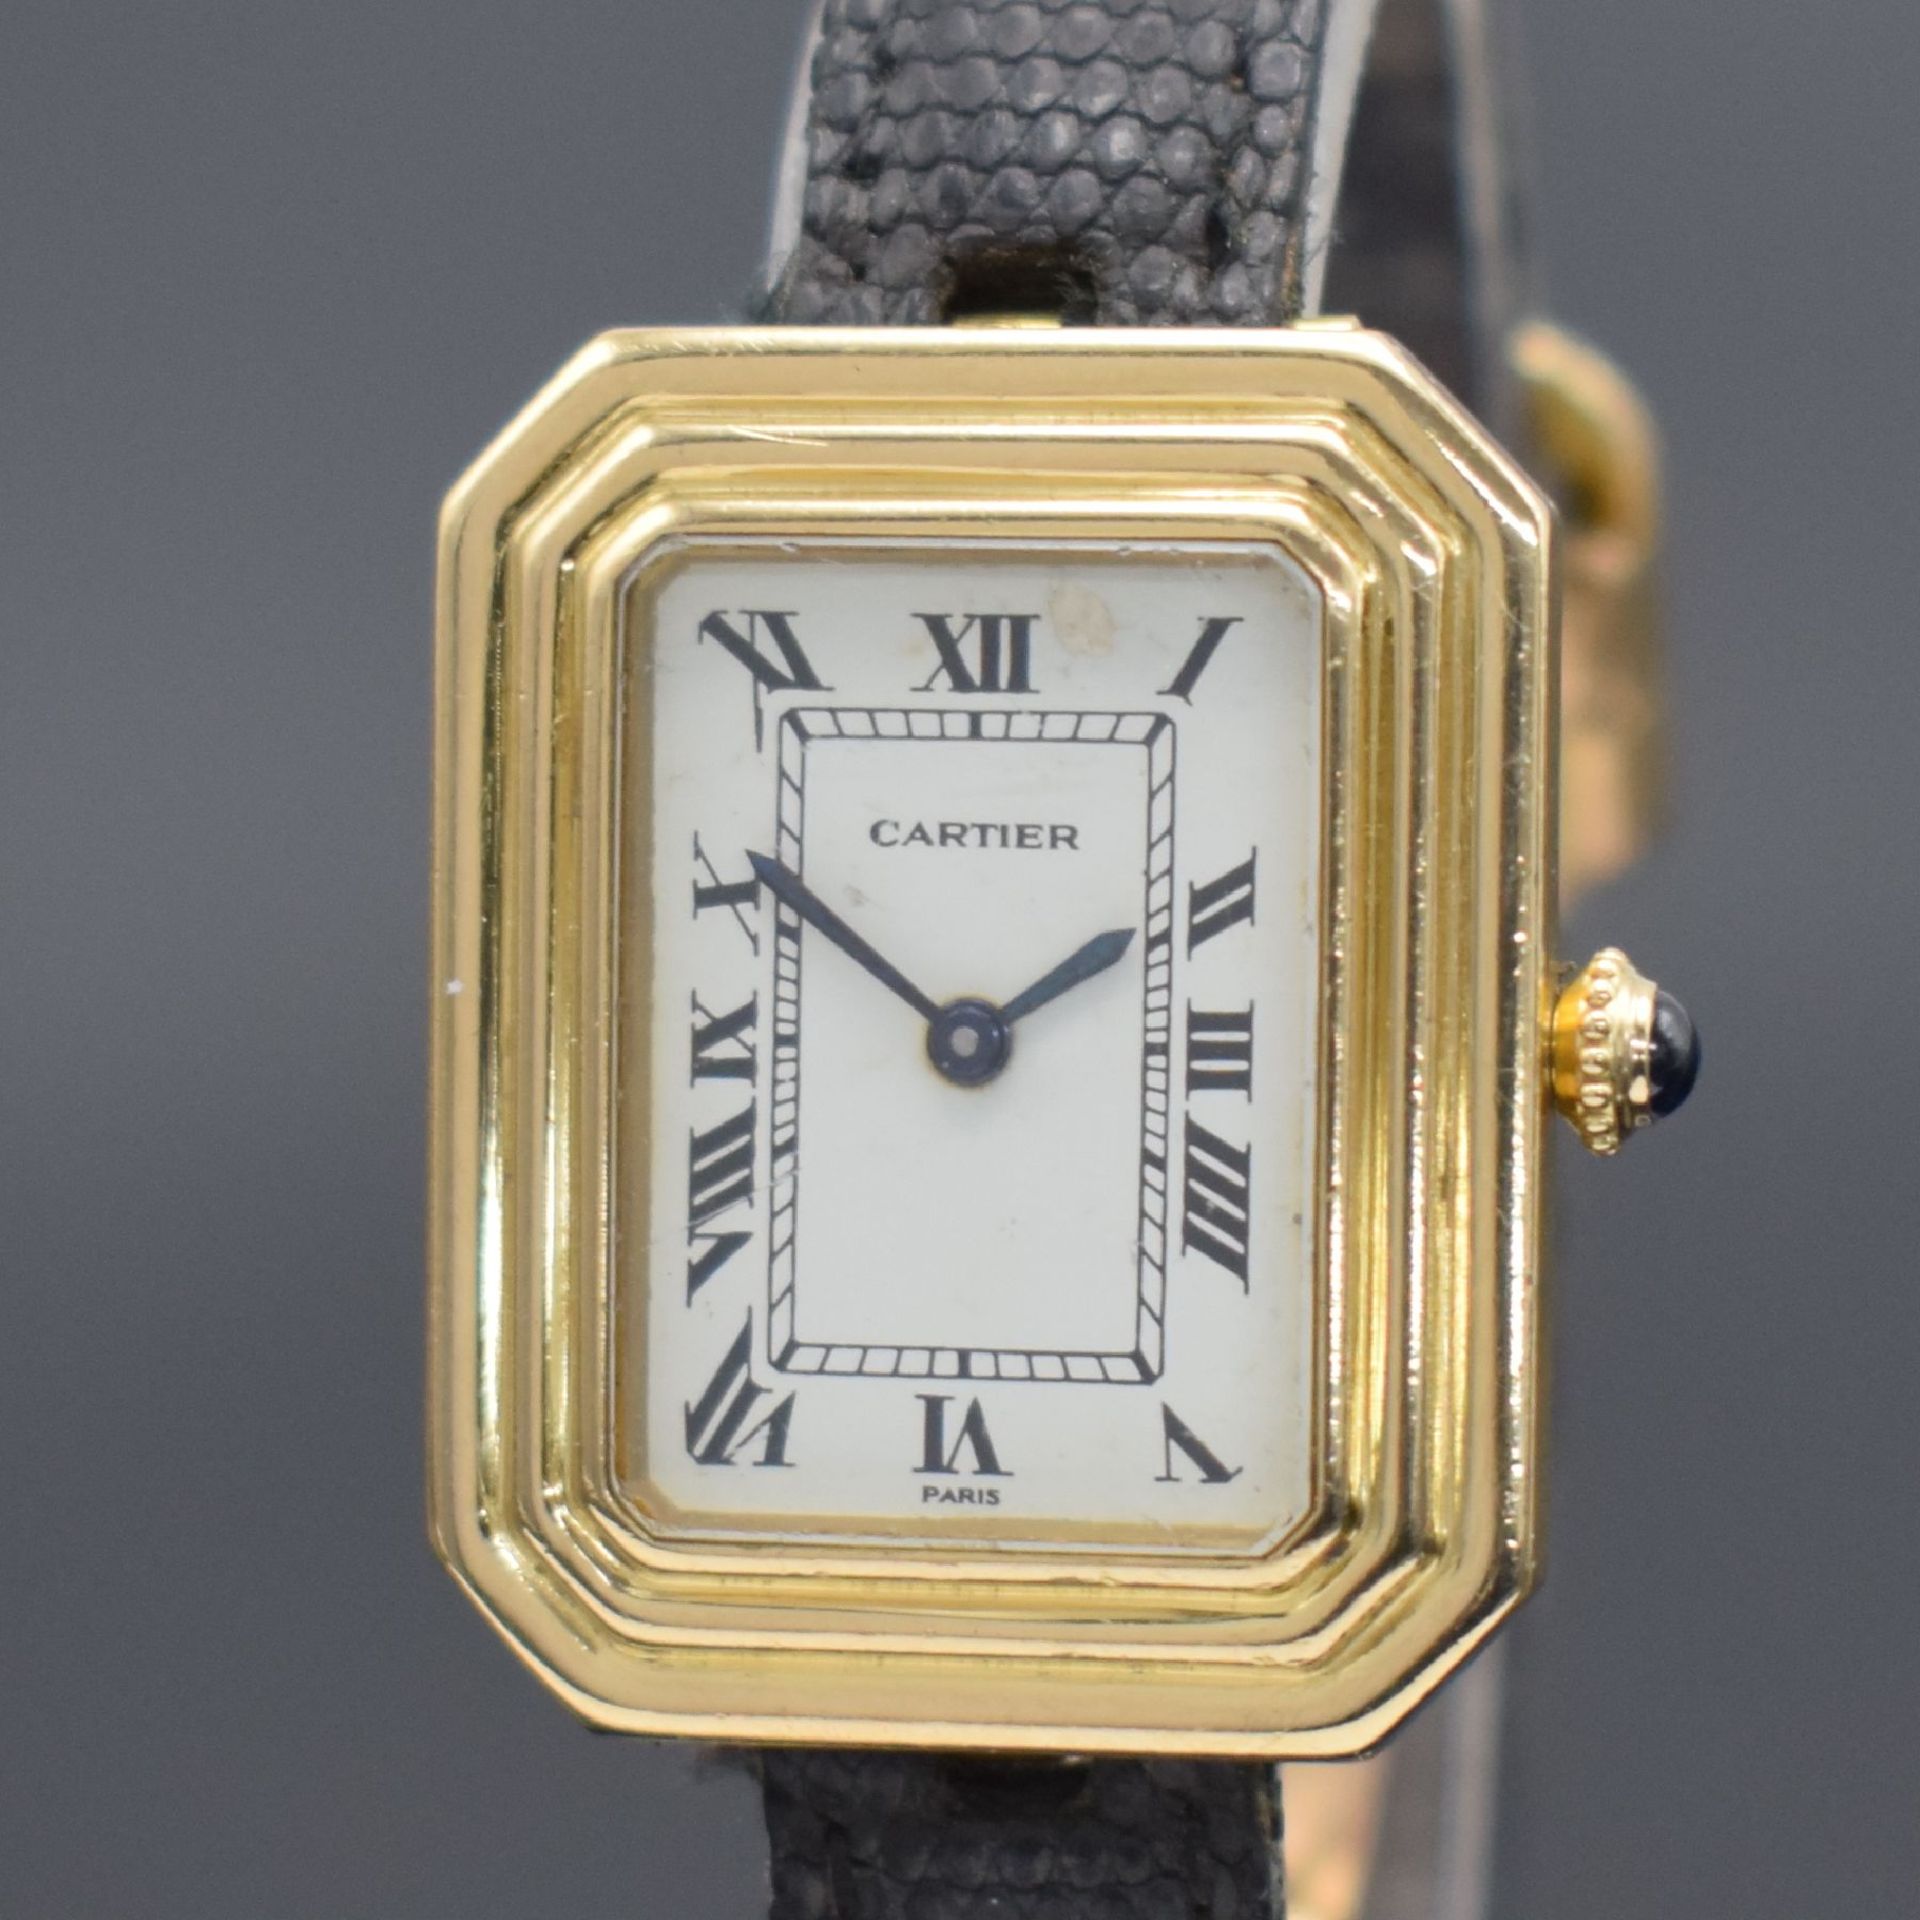 CARTIER Paris Square seltene Armbanduhr in GG 750/000, - Bild 2 aus 5